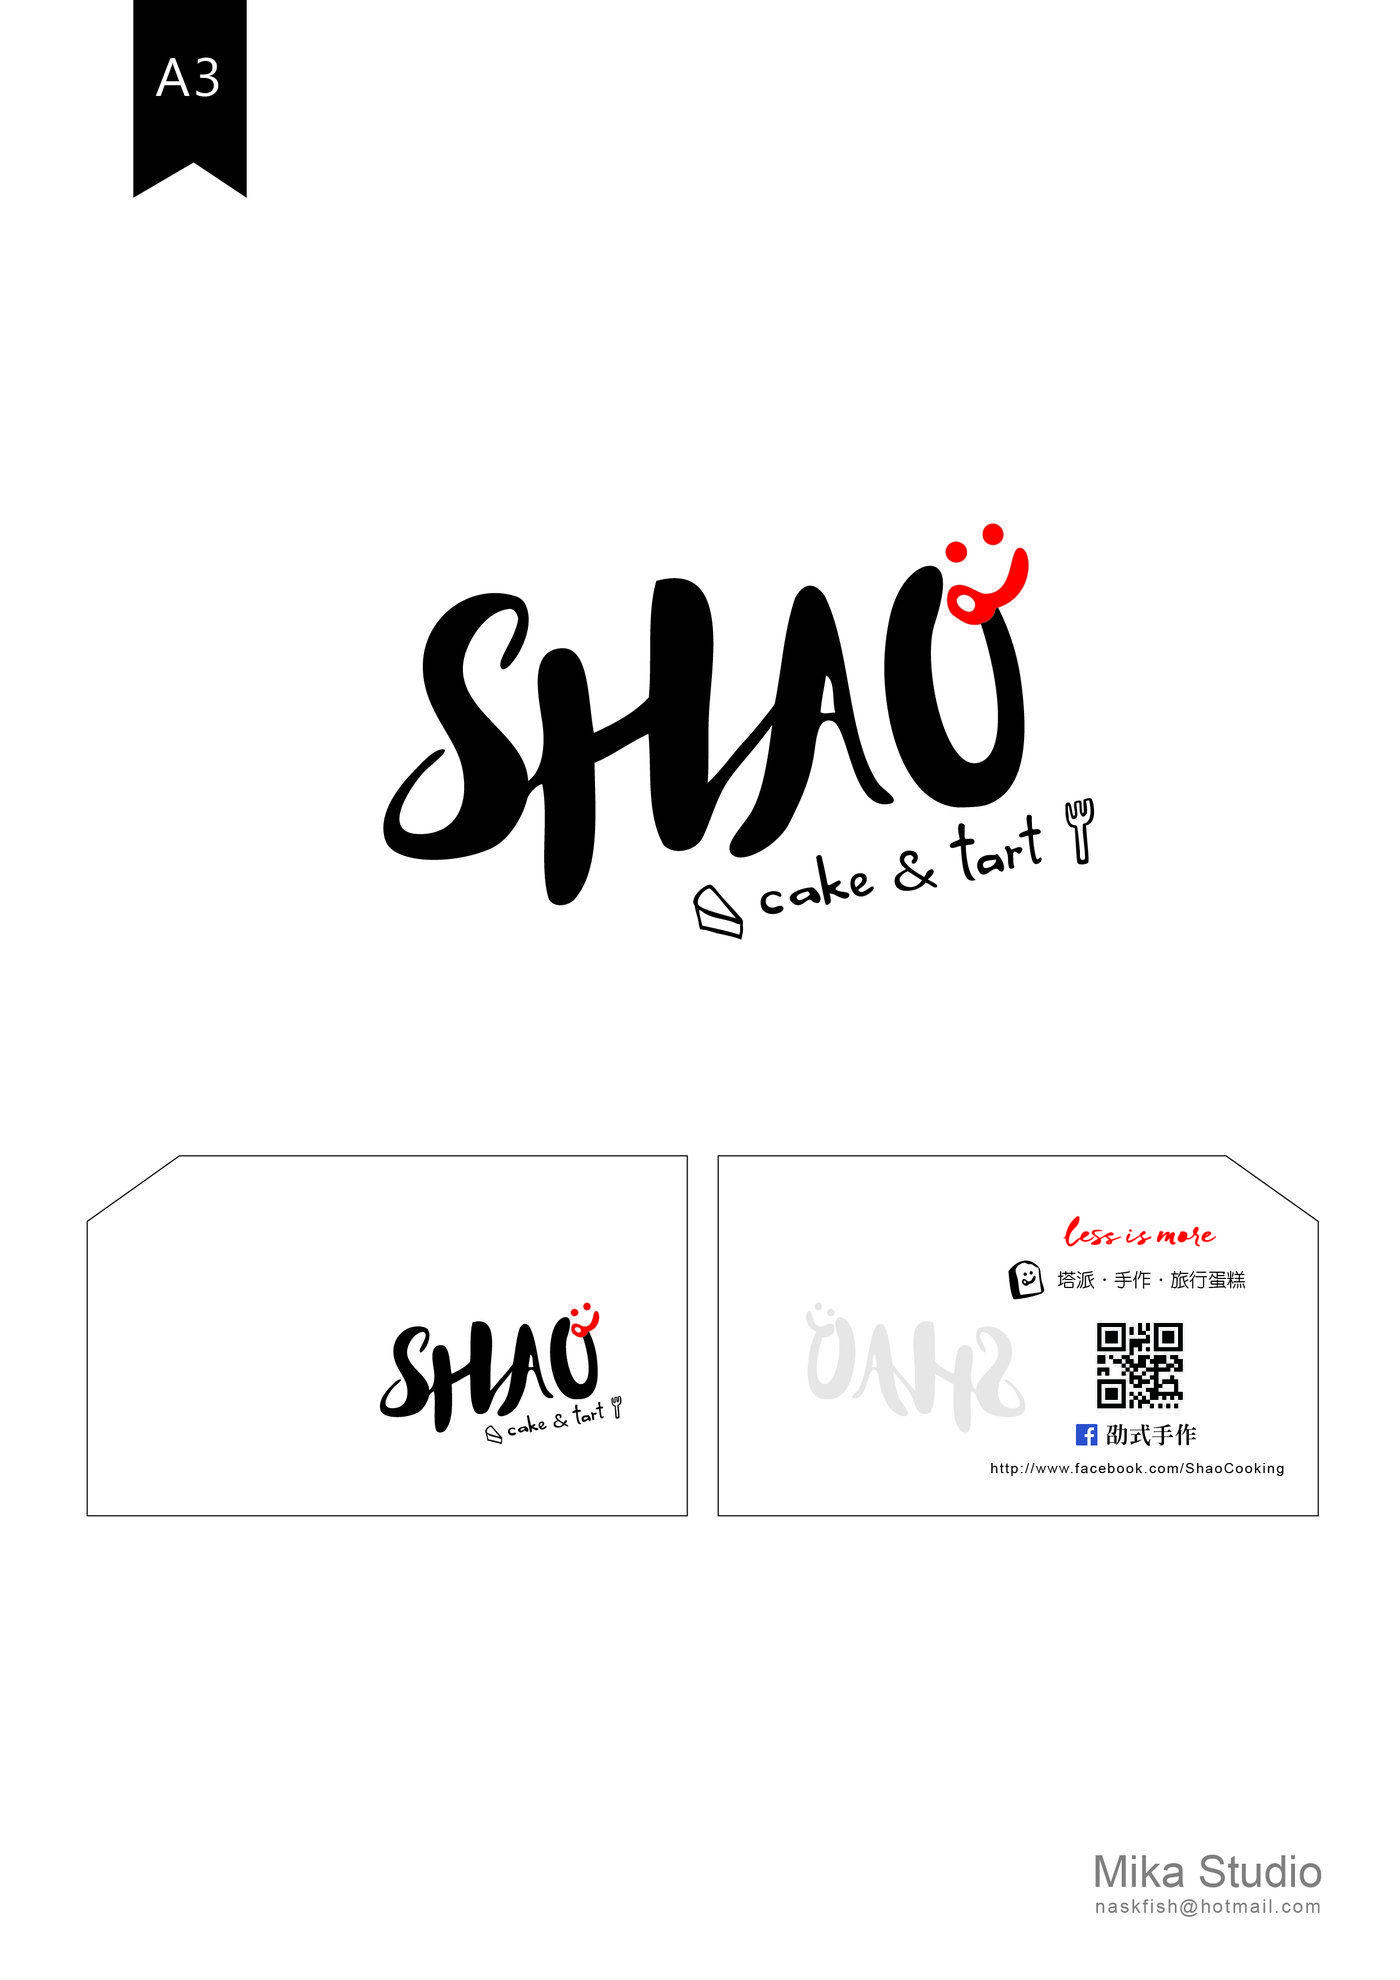 Shao Logo - SHAO 手工甜點Logo Design by Mika Hsiang at Coroflot.com